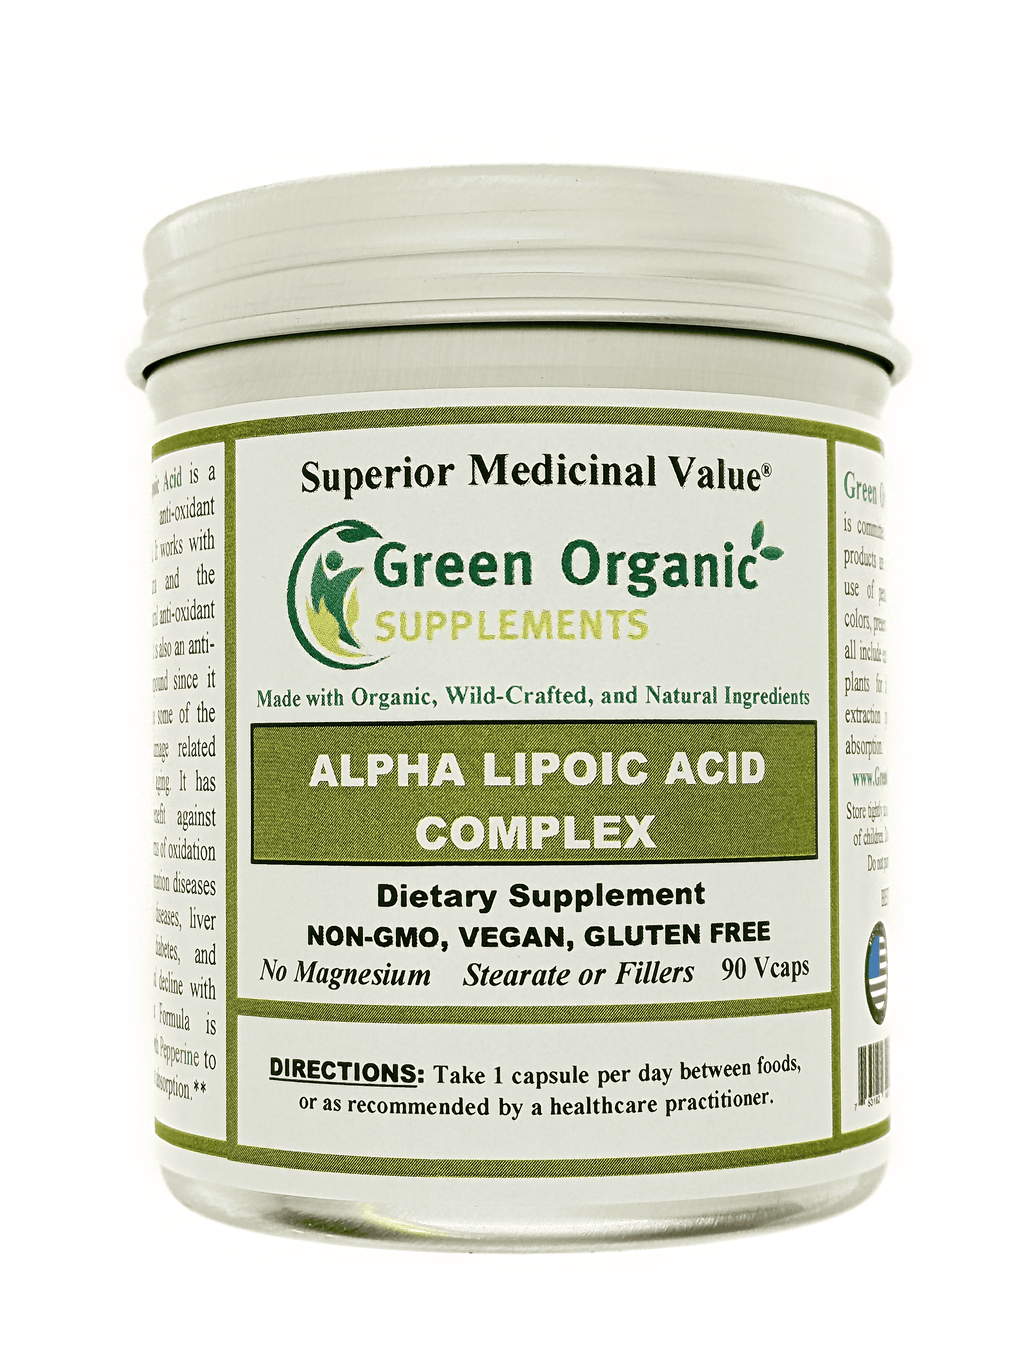 Buy organic supplements for women - Alpha Lipoic Acid, ALA